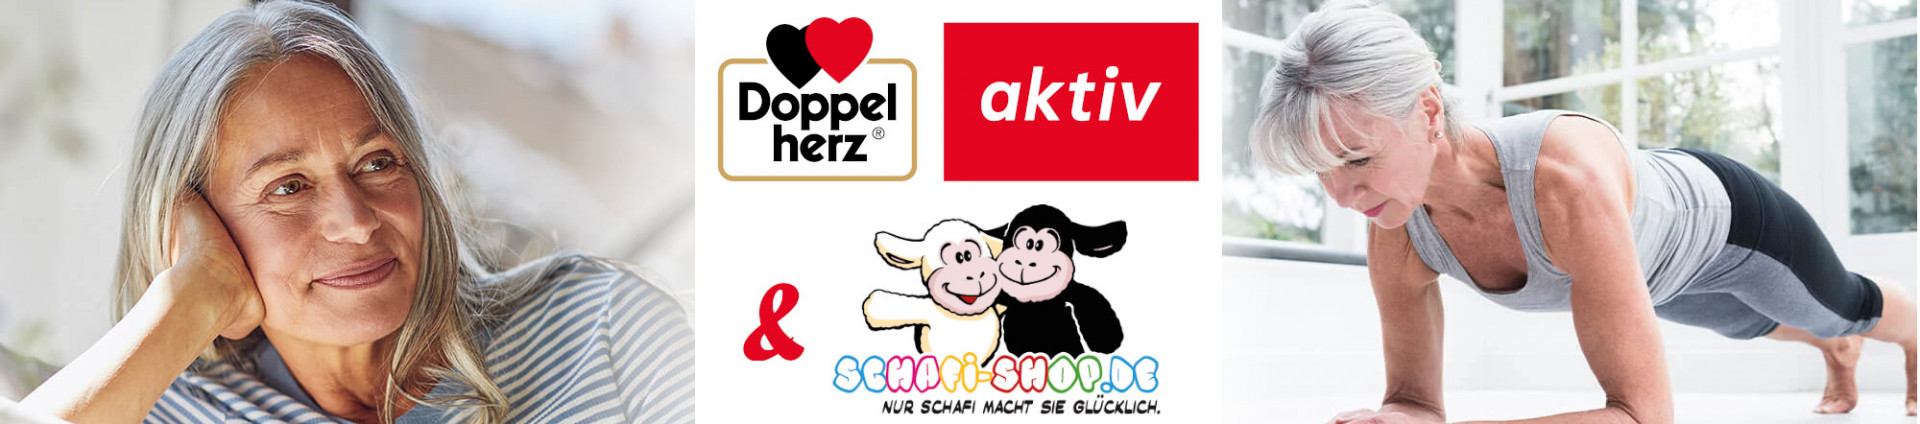 Doppelherz Aktiv logo and Schafi store logo with elderly lady